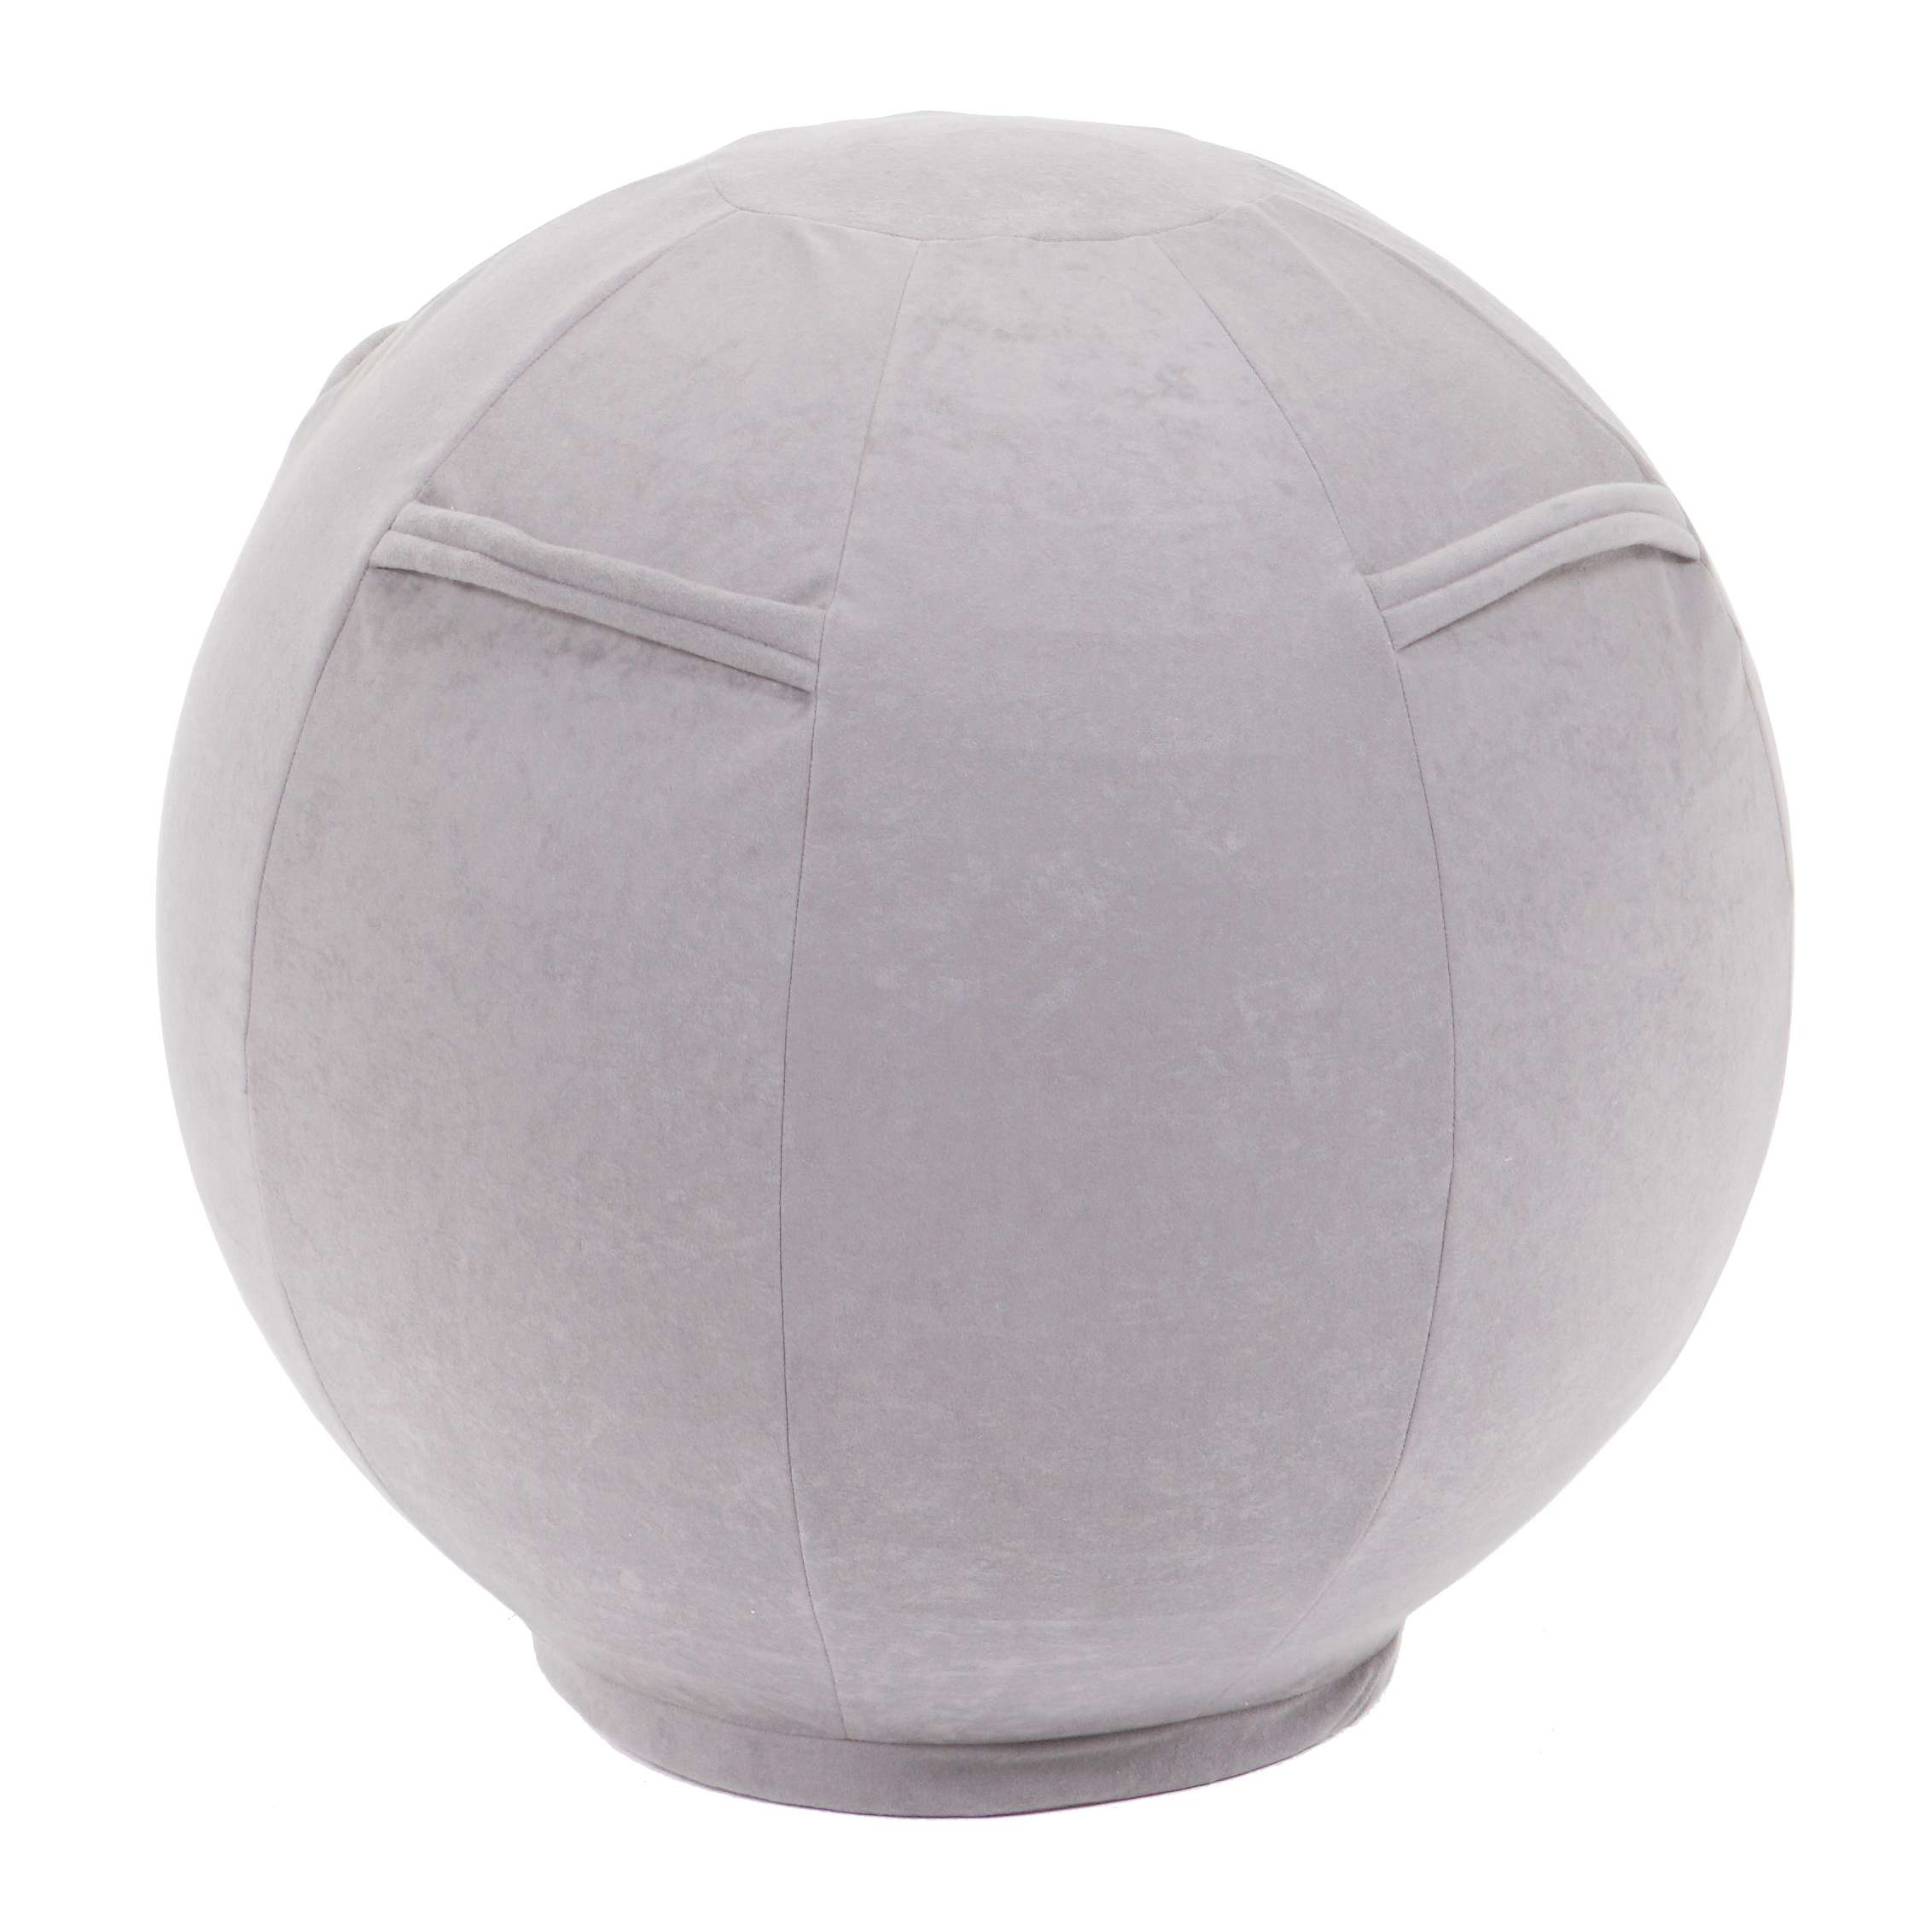 Ballbezug für Gymnastikball, 55 cm